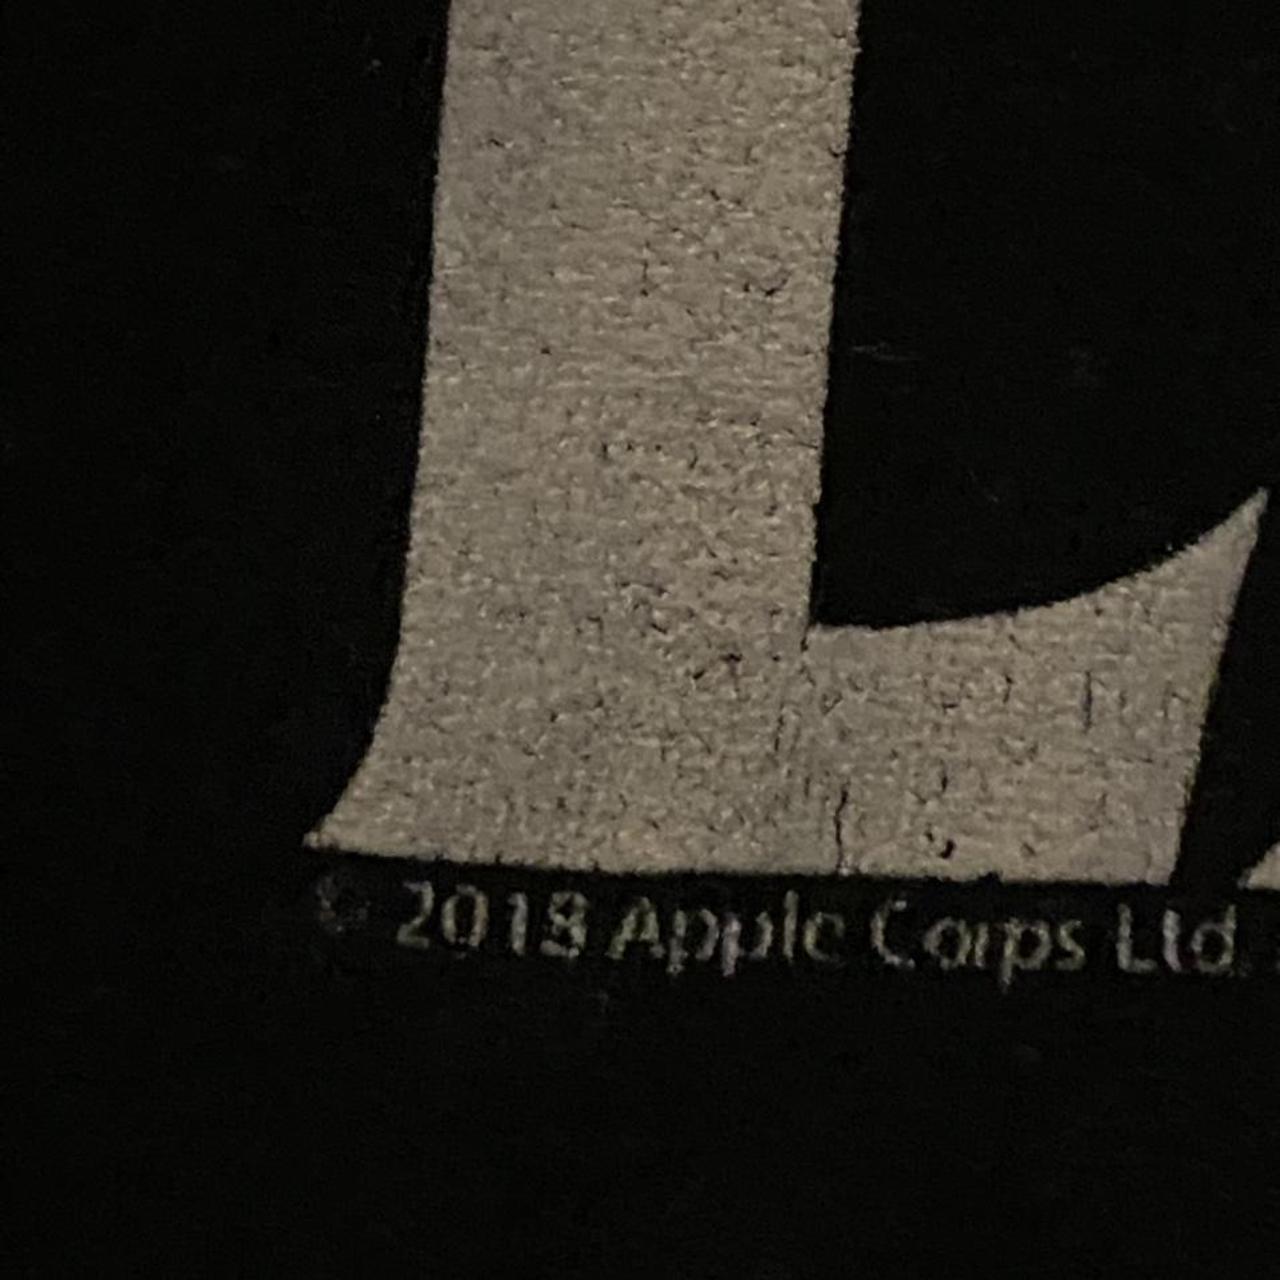 Apple Women's Black T-shirt (2)